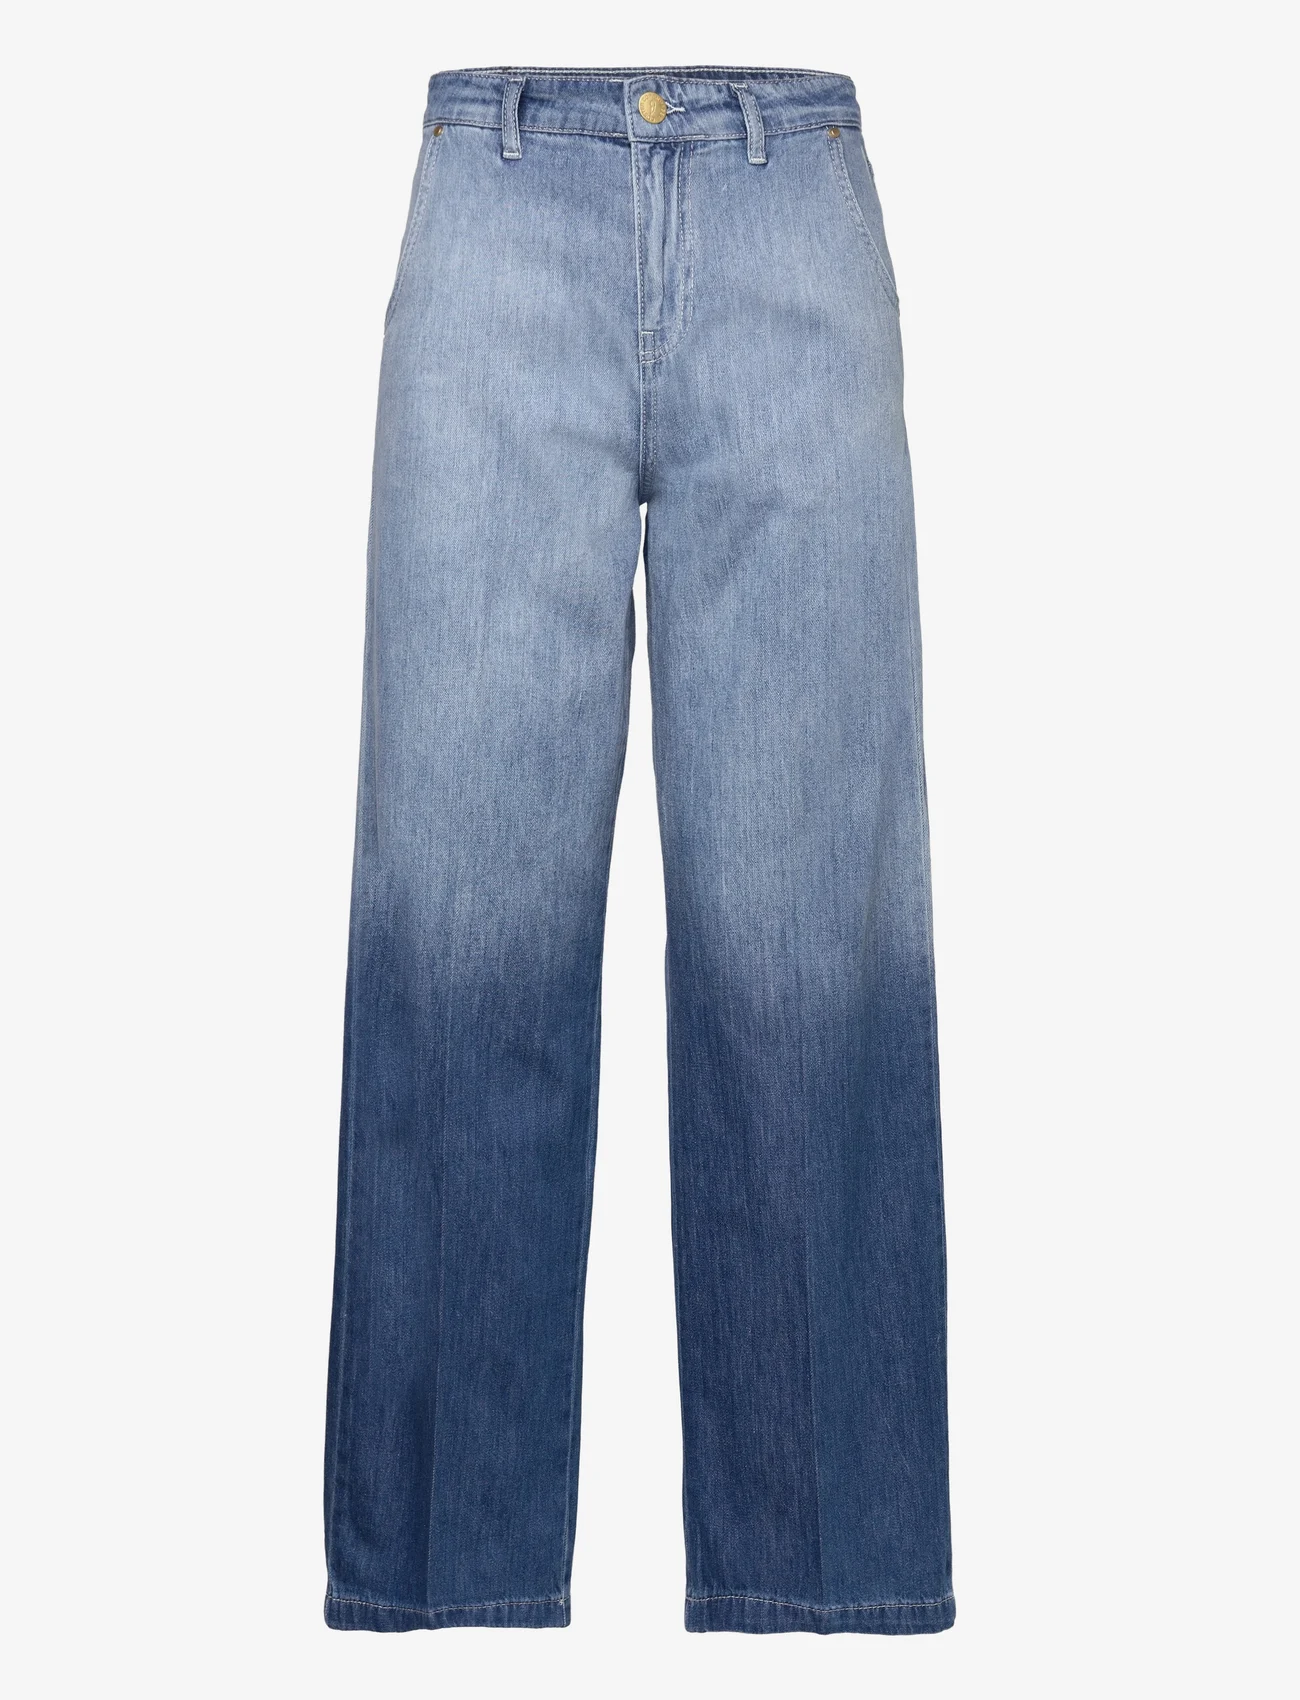 Coster Copenhagen - Jeans with wide legs and press fold - Petra fit - hosen mit weitem bein - denim fade - 0